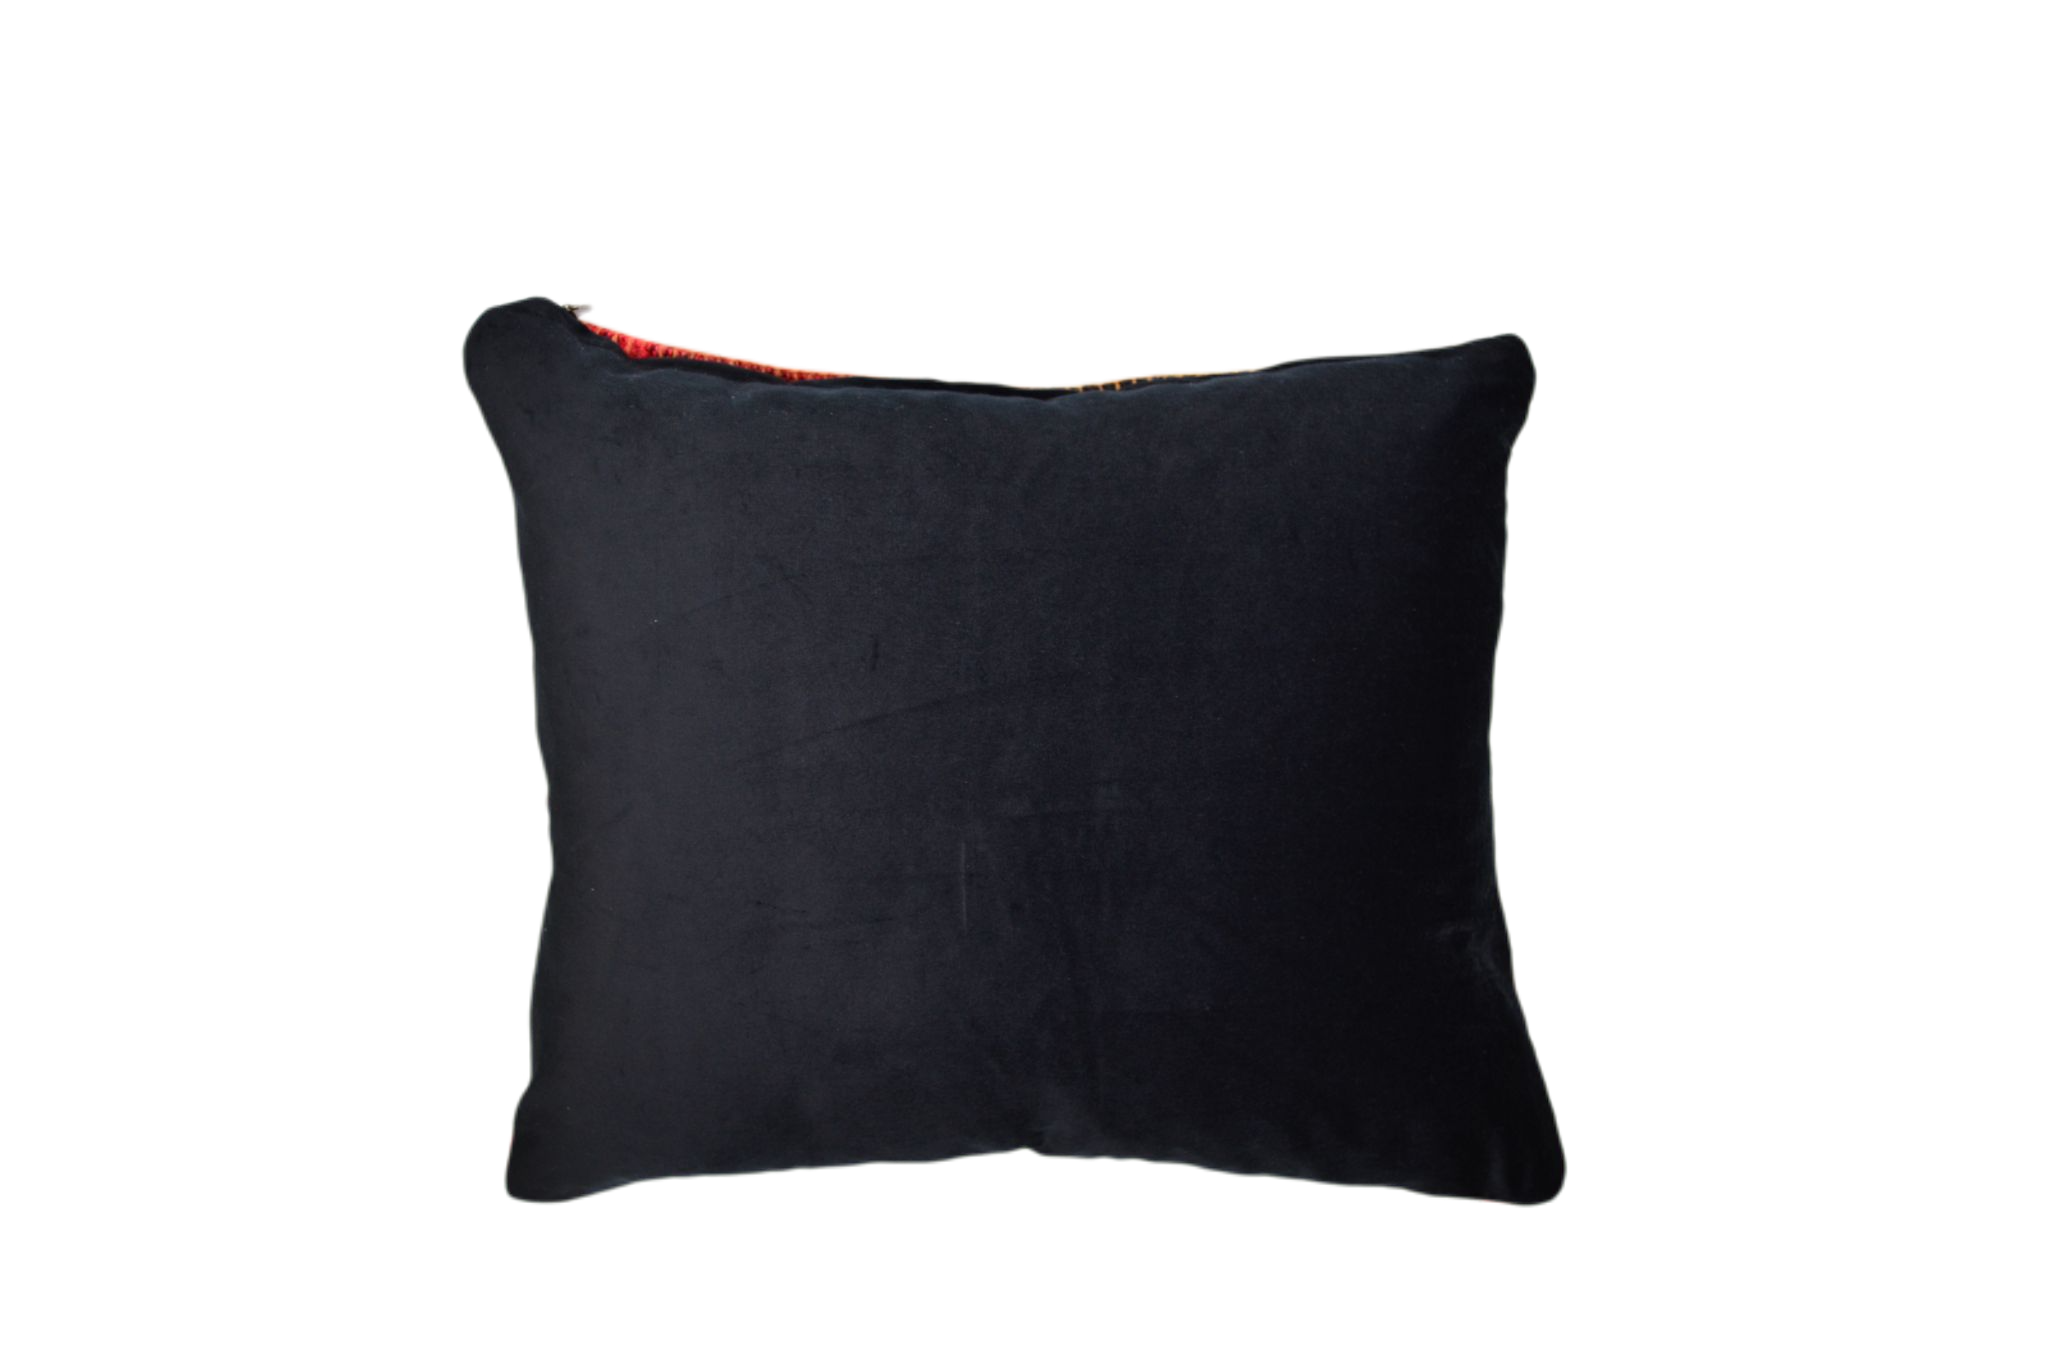 Pillow: Artifact textile, handwoven in Bulgaria - P472